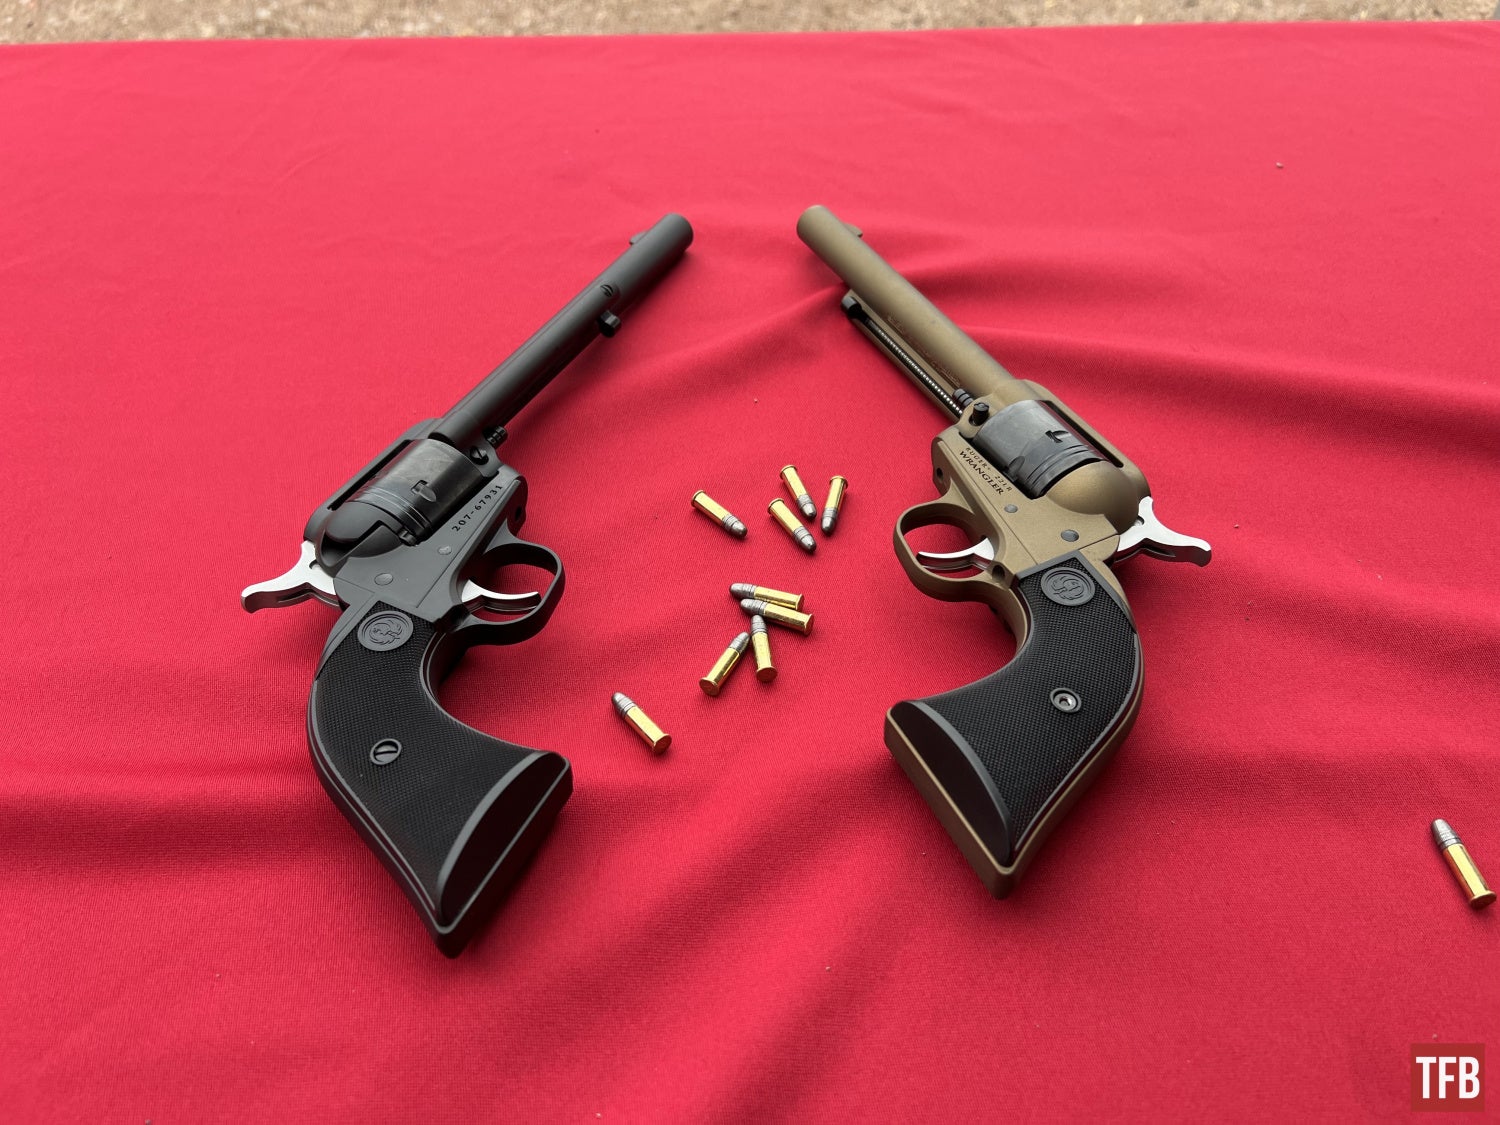 Tfb wrangler6 | wheelgun wednesday: shot 2023 revolver roundup | 2nd amendment